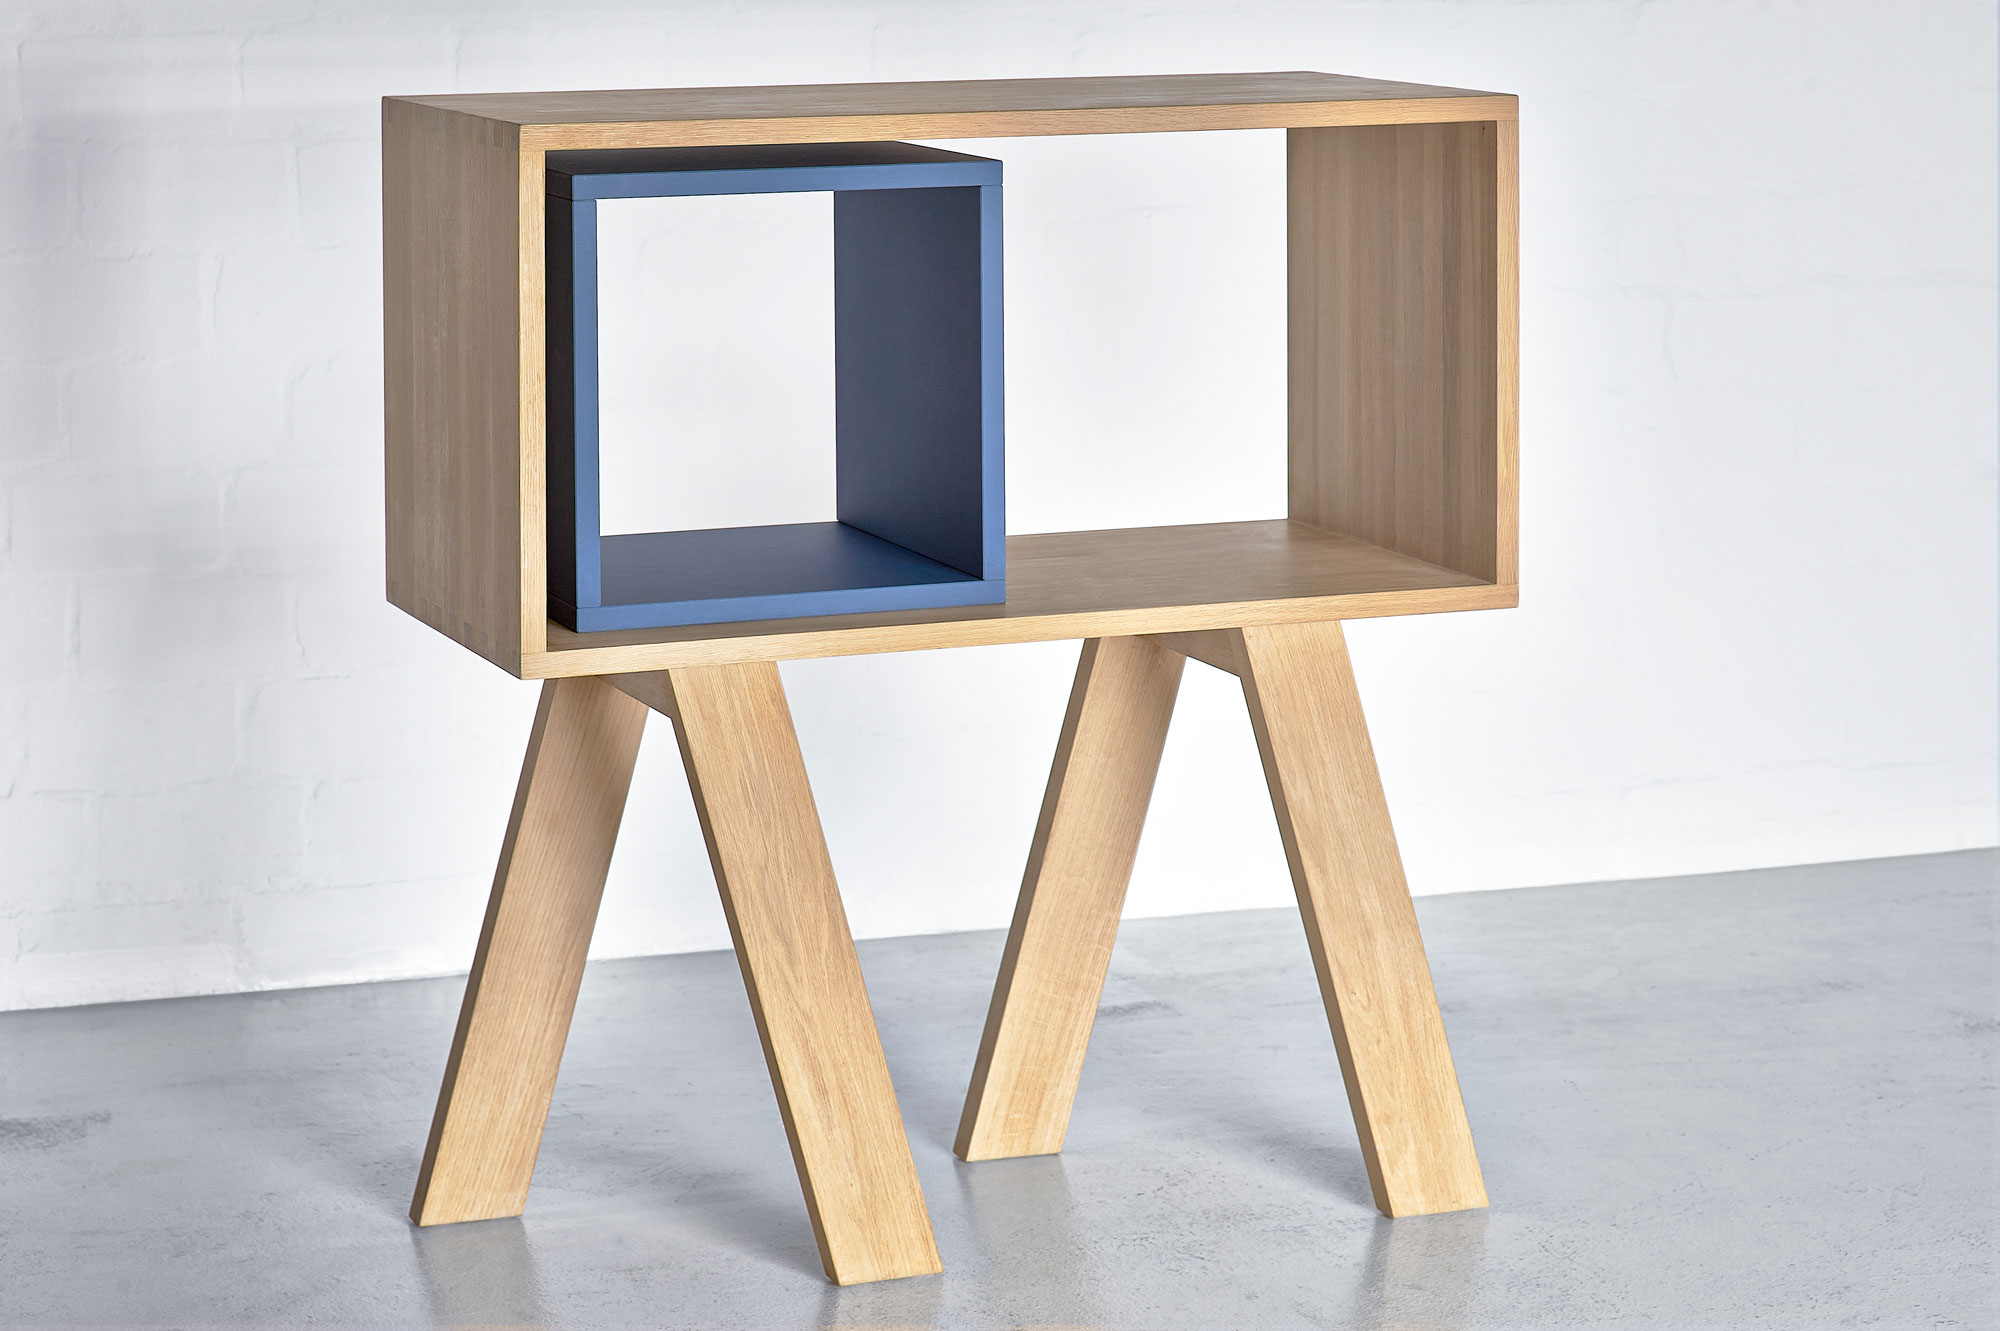 Designer Solid Wood Shelf GO 0092a custom made in solid wood by vitamin design